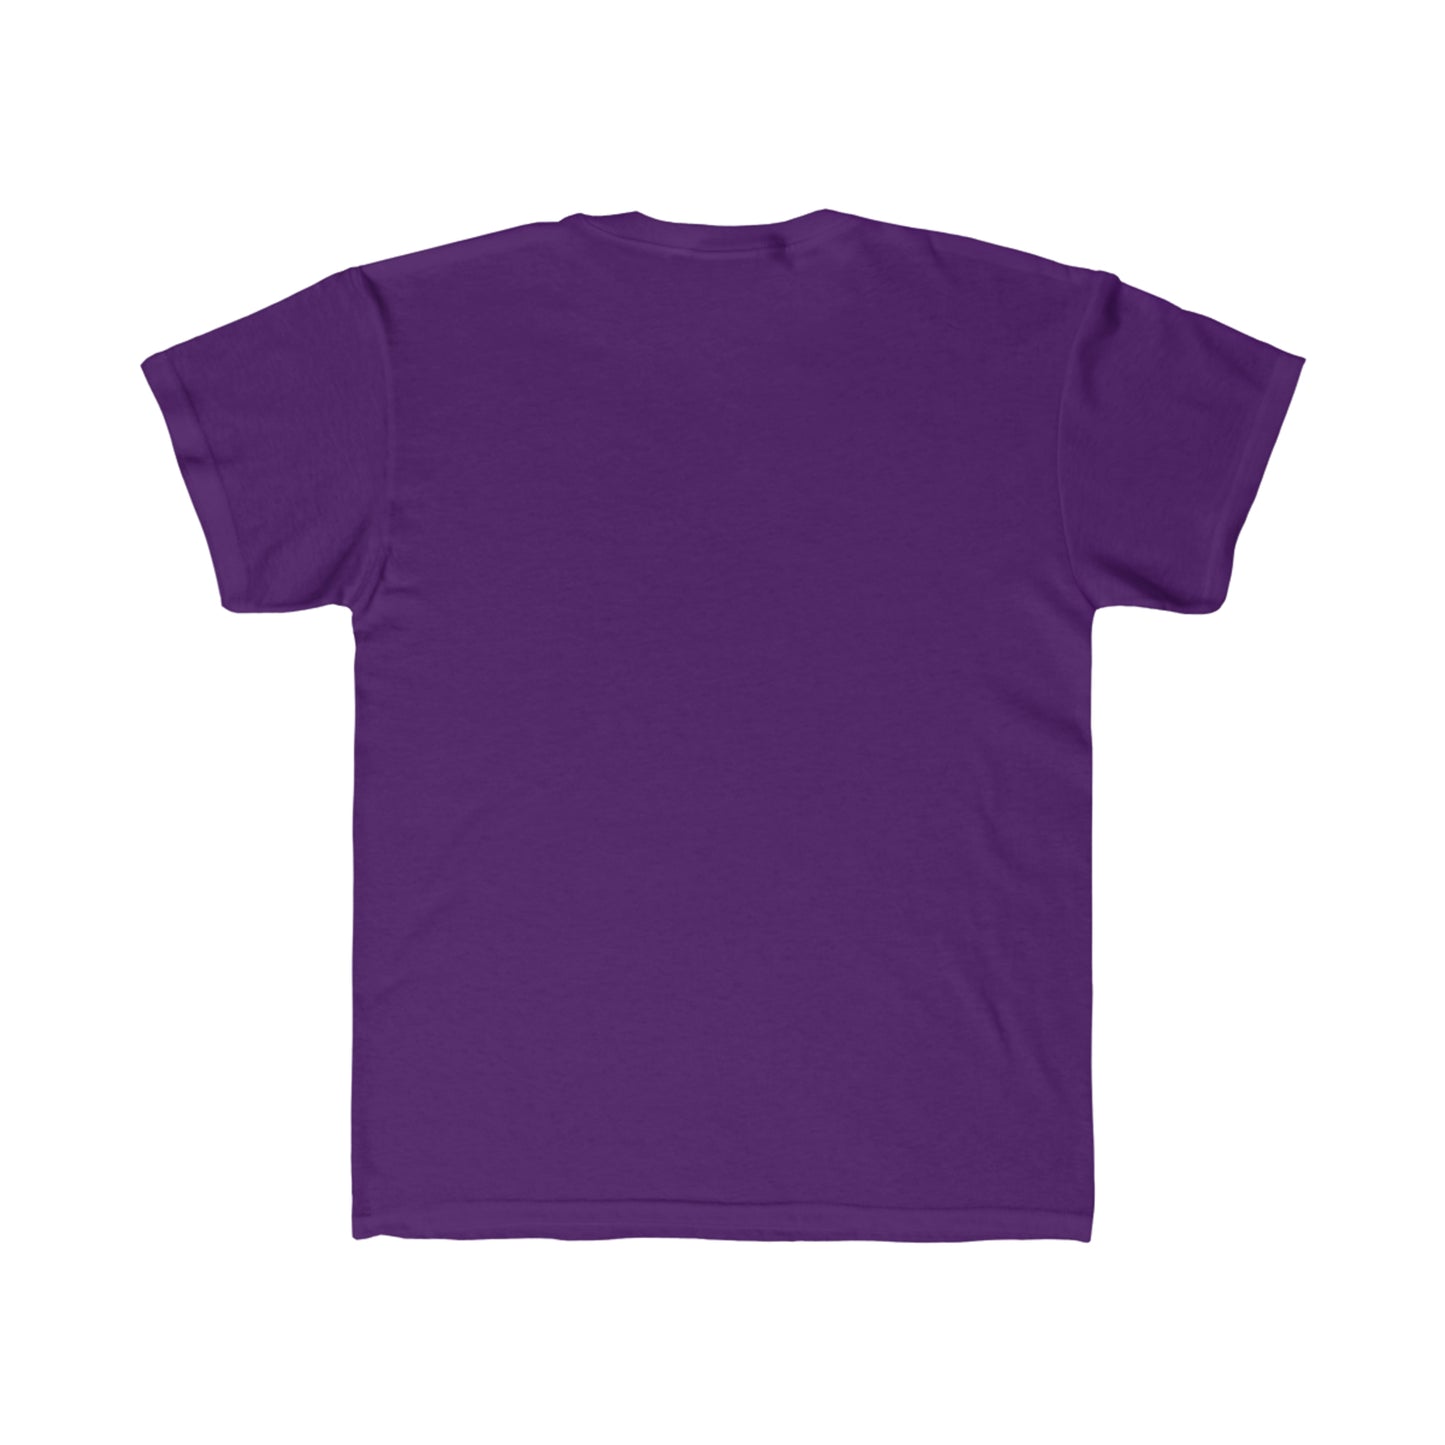 Ray Cube Kids T-Shirt